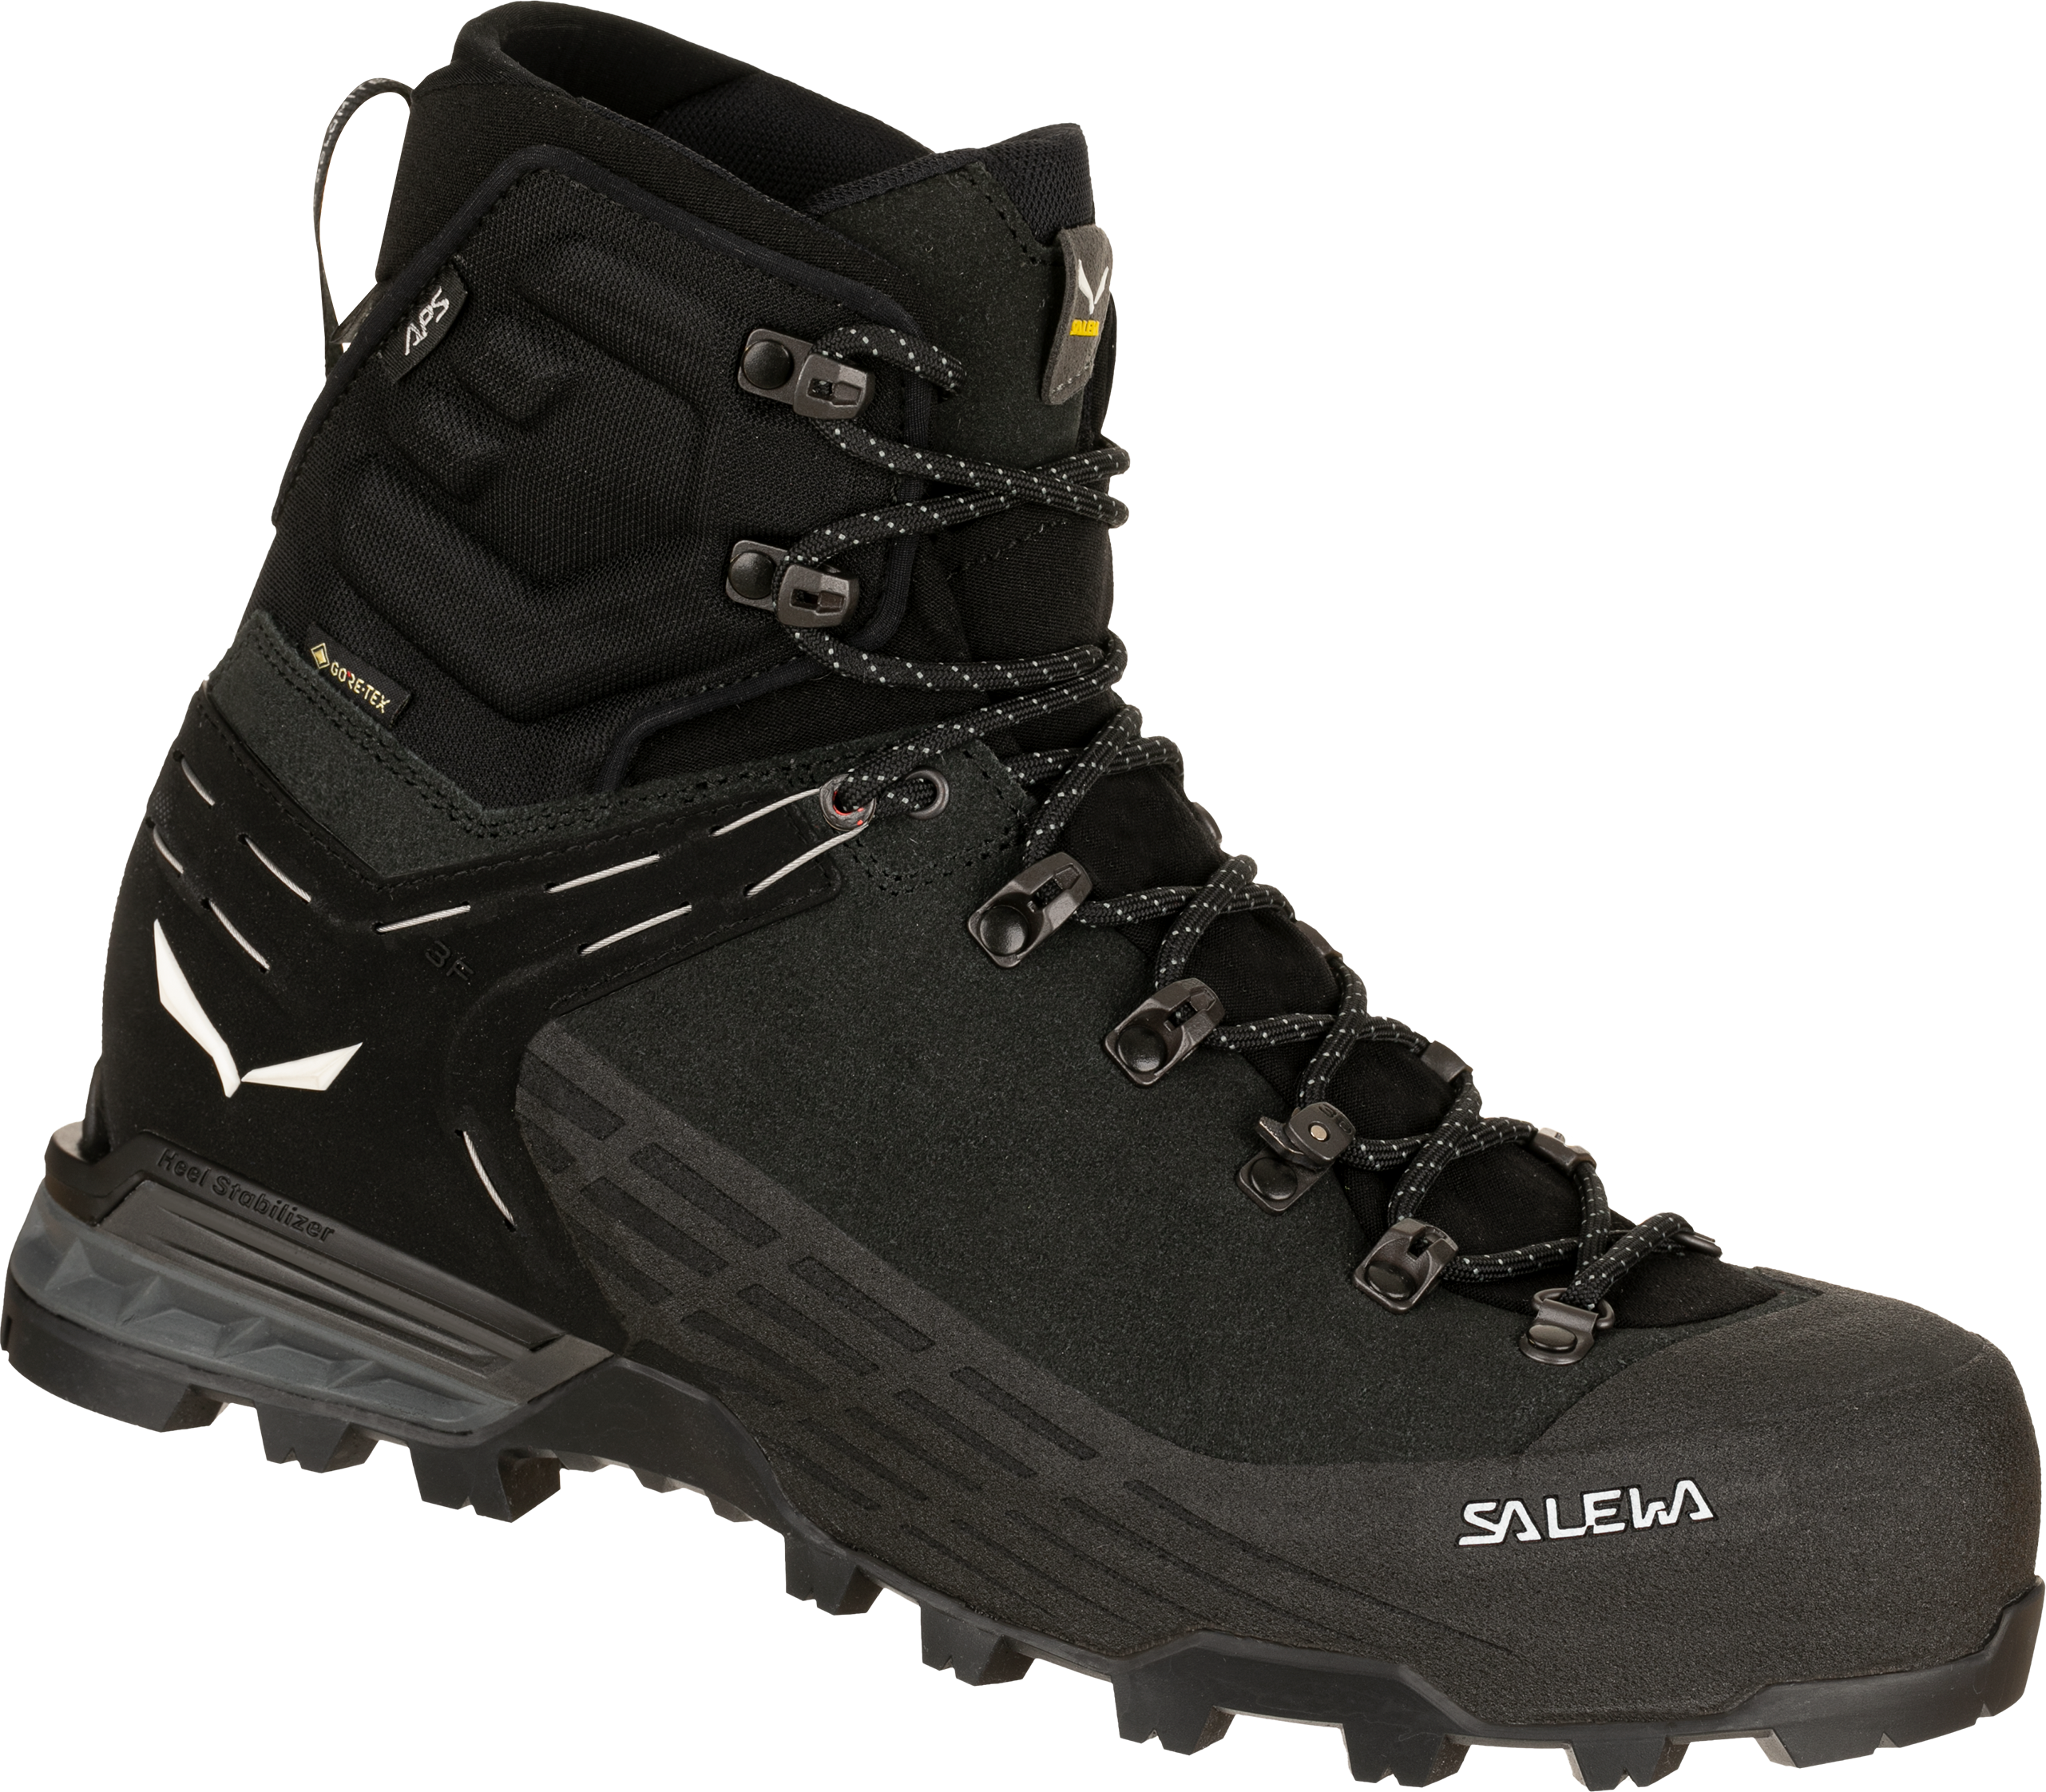 Salewa Women's Ortles Ascent Mid GORE-TEX Boot Black 36.5, Black